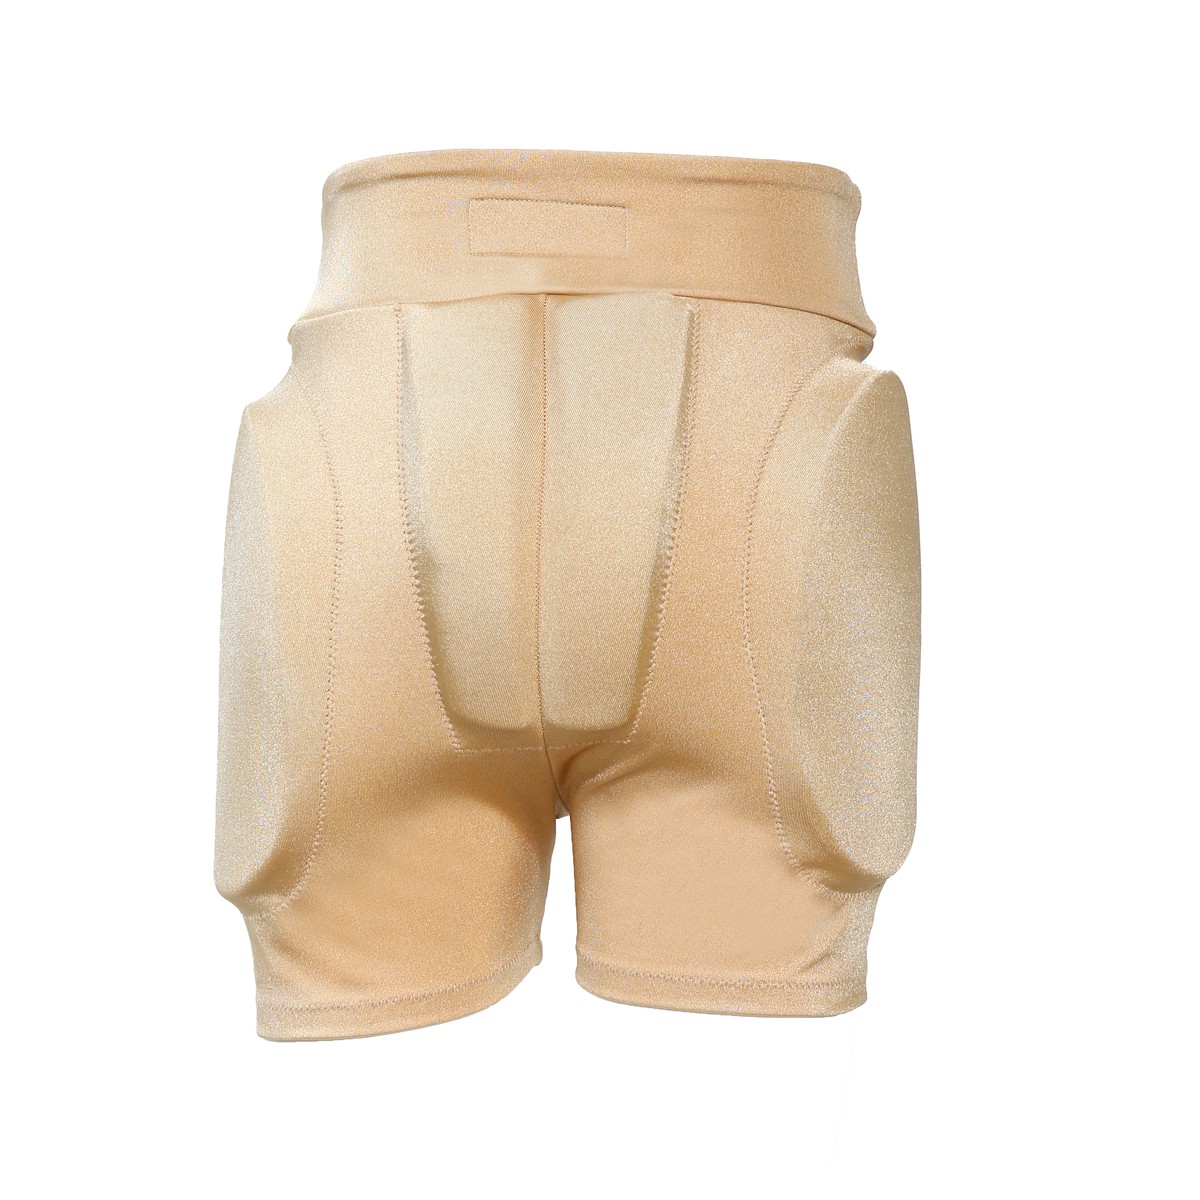 Classic Padded Protective Shorts - XAMAS